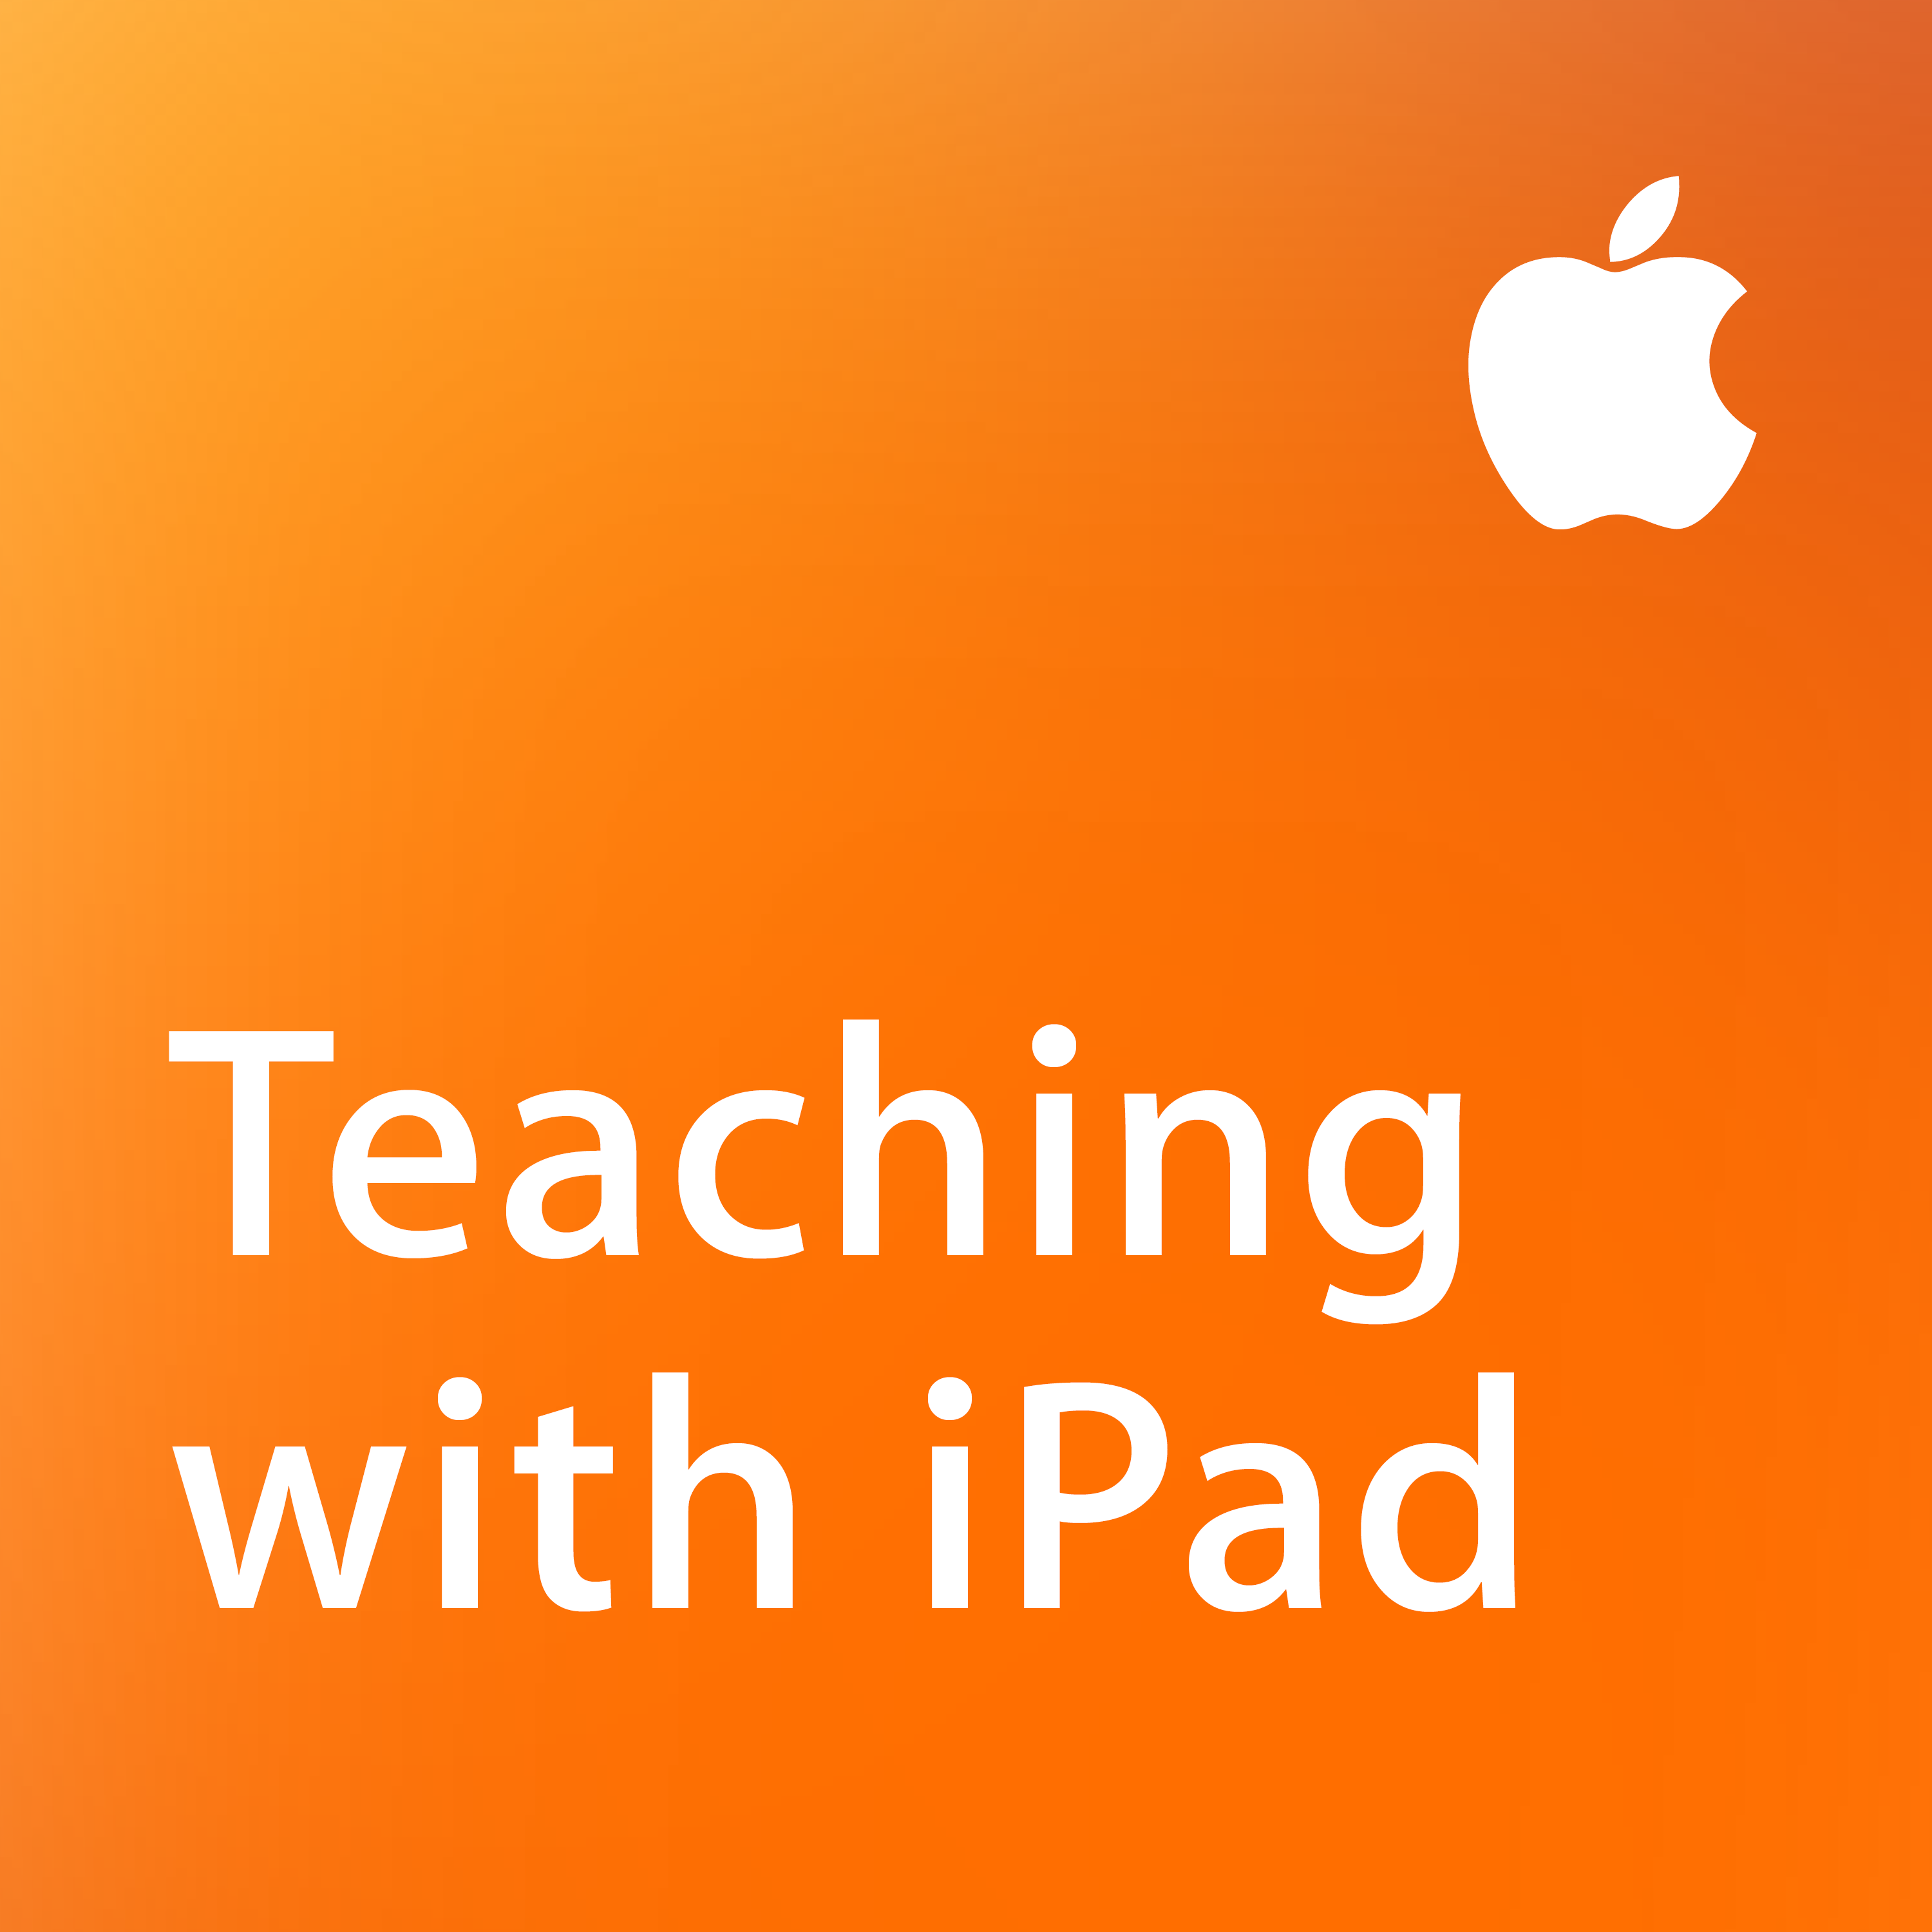 Teaching with iPad